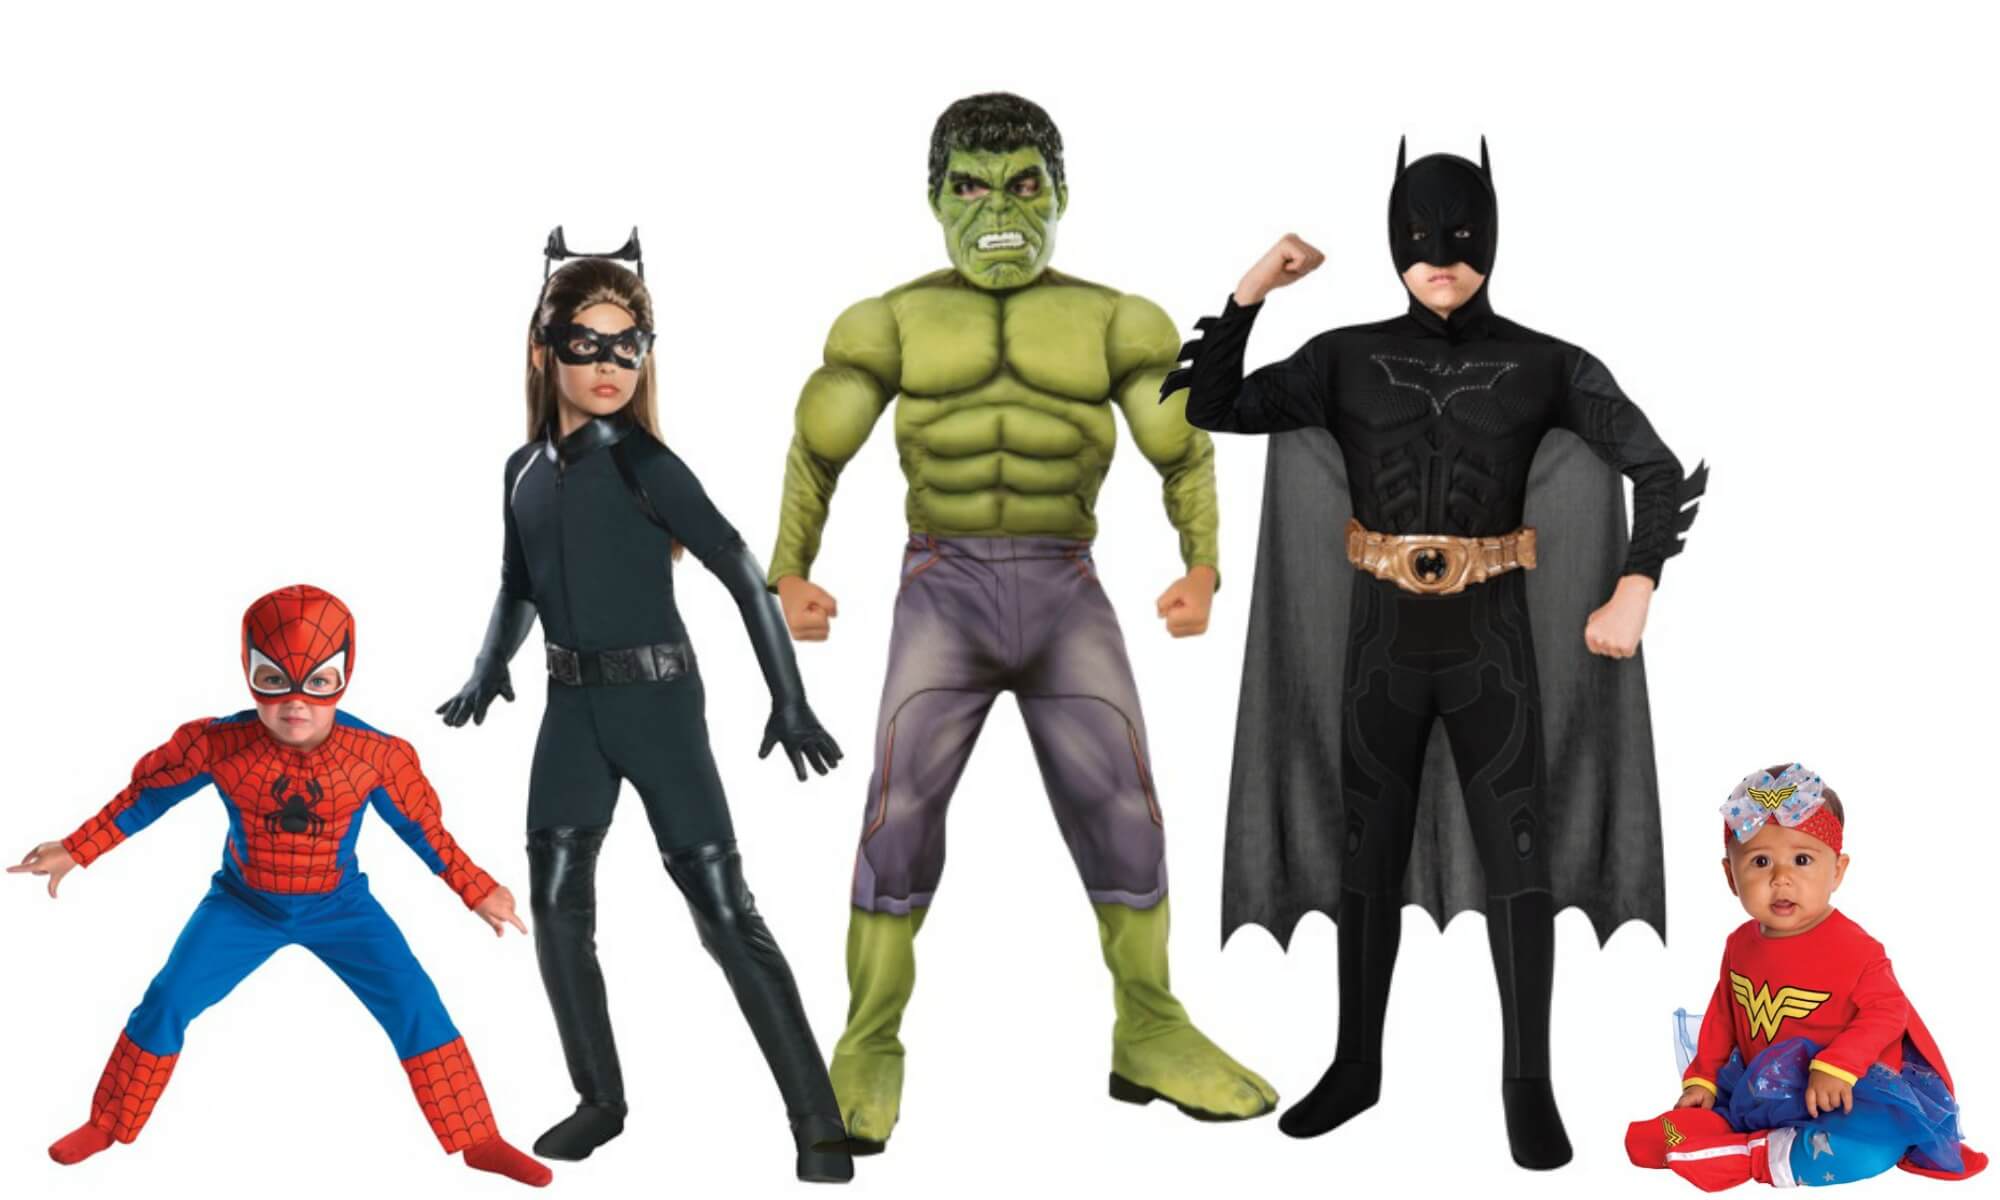 Superhero costumes for kids